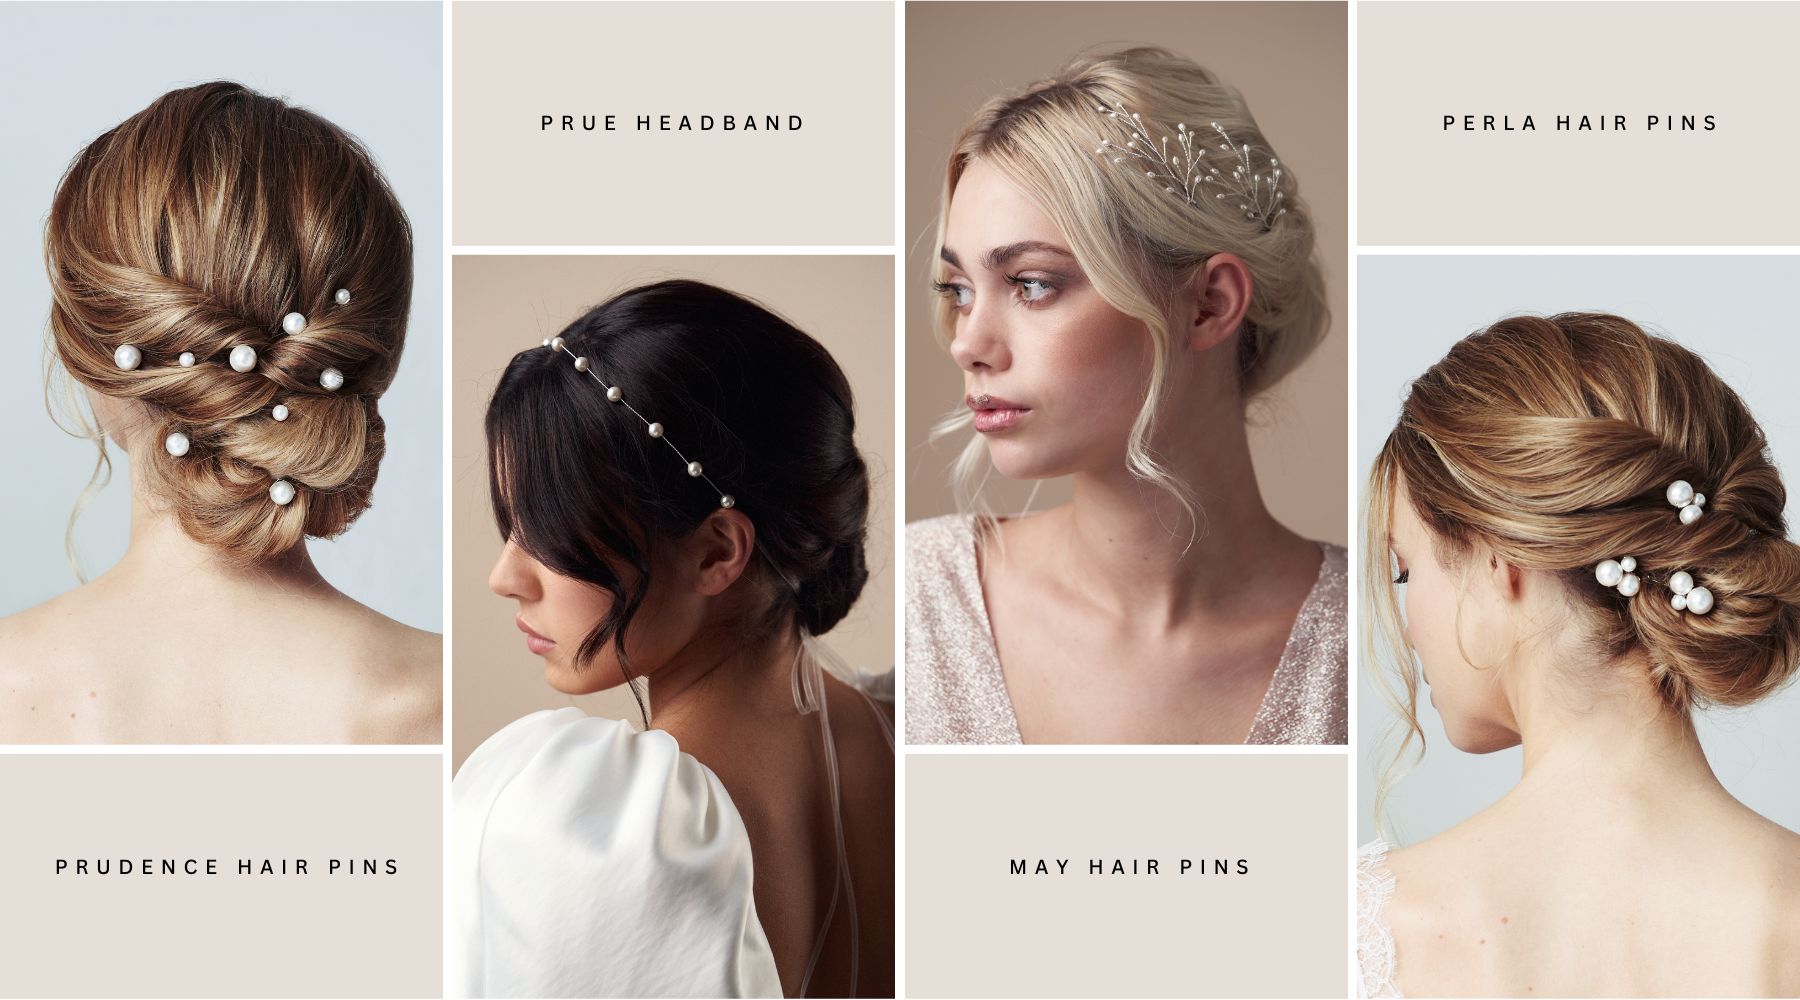 models wear pearl wedding hair accessories - hairpins and a headband